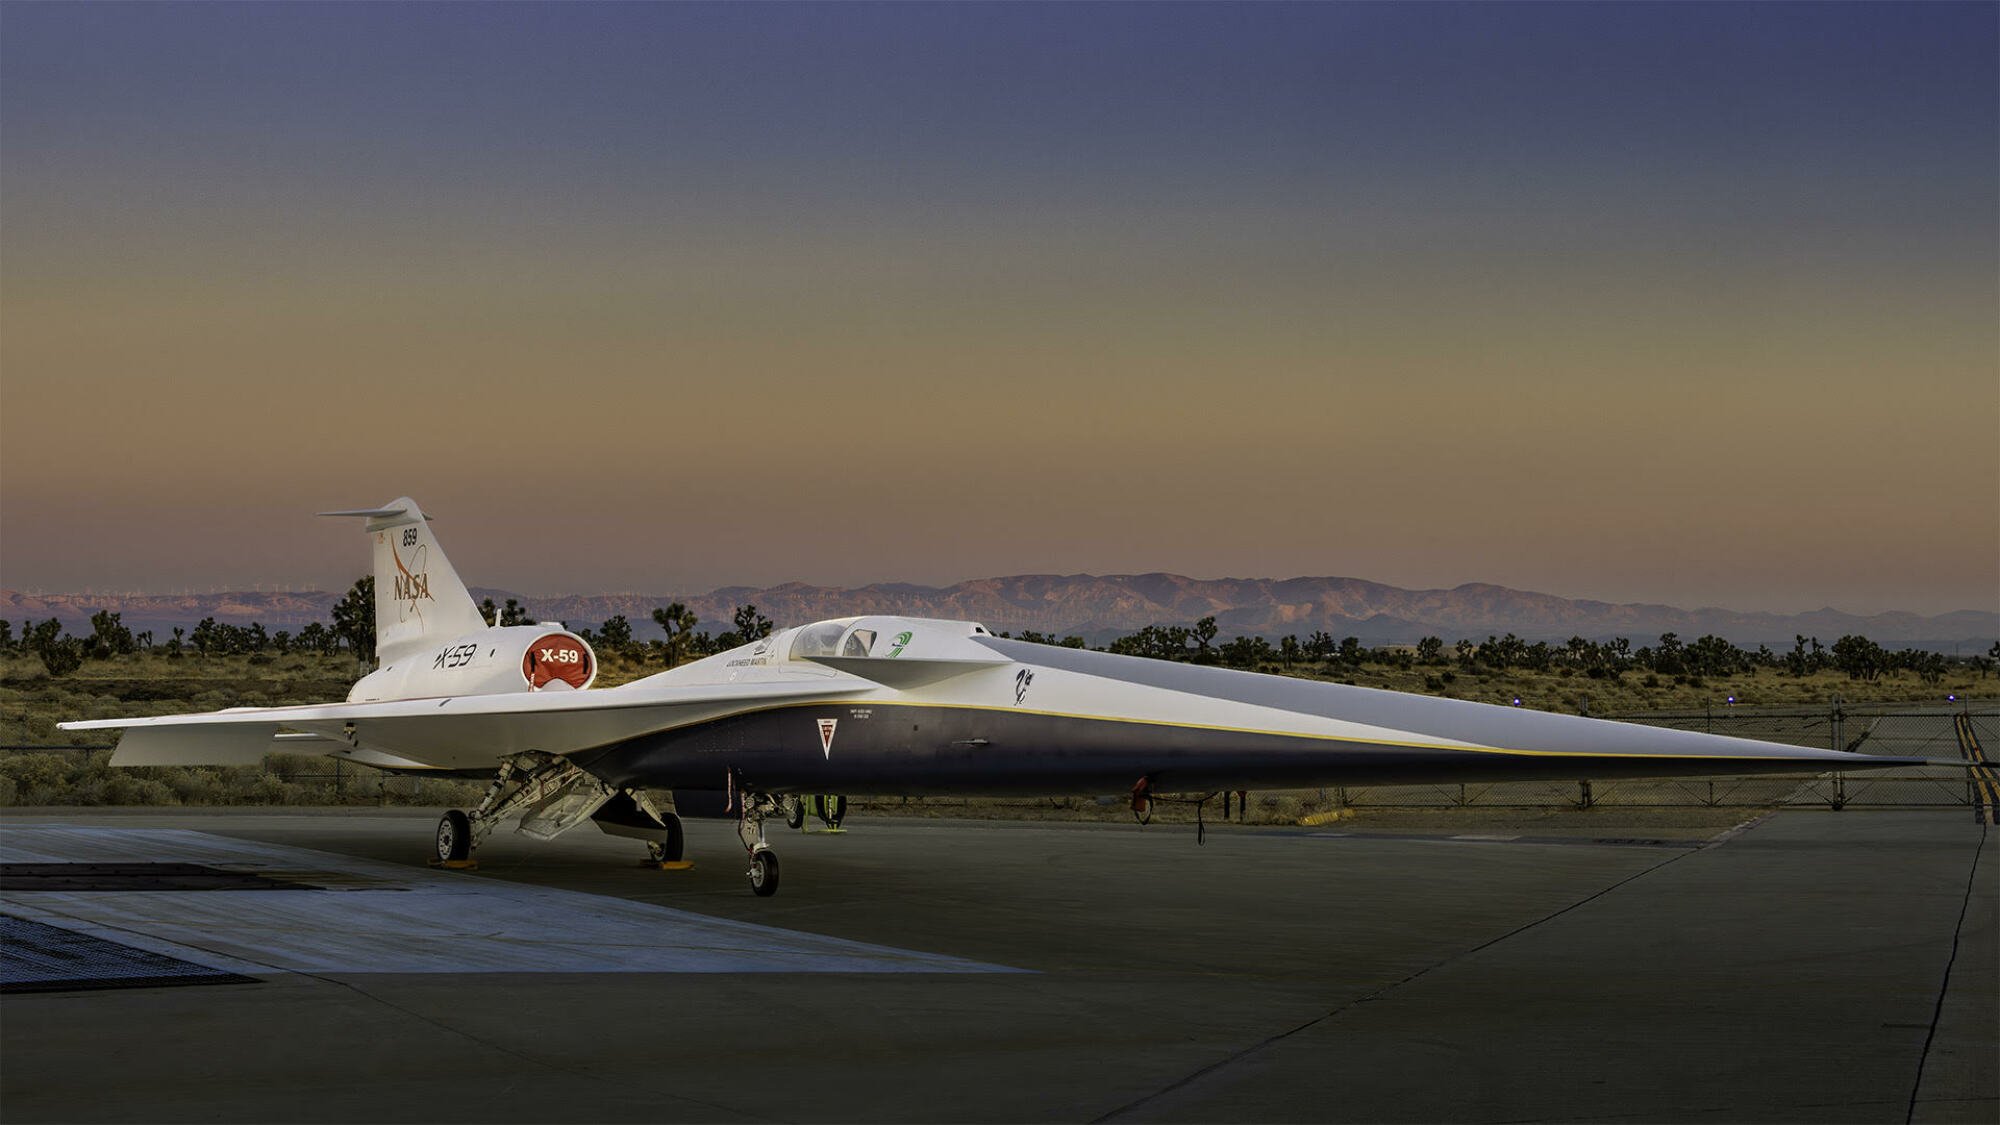 NASA's X-59 plane